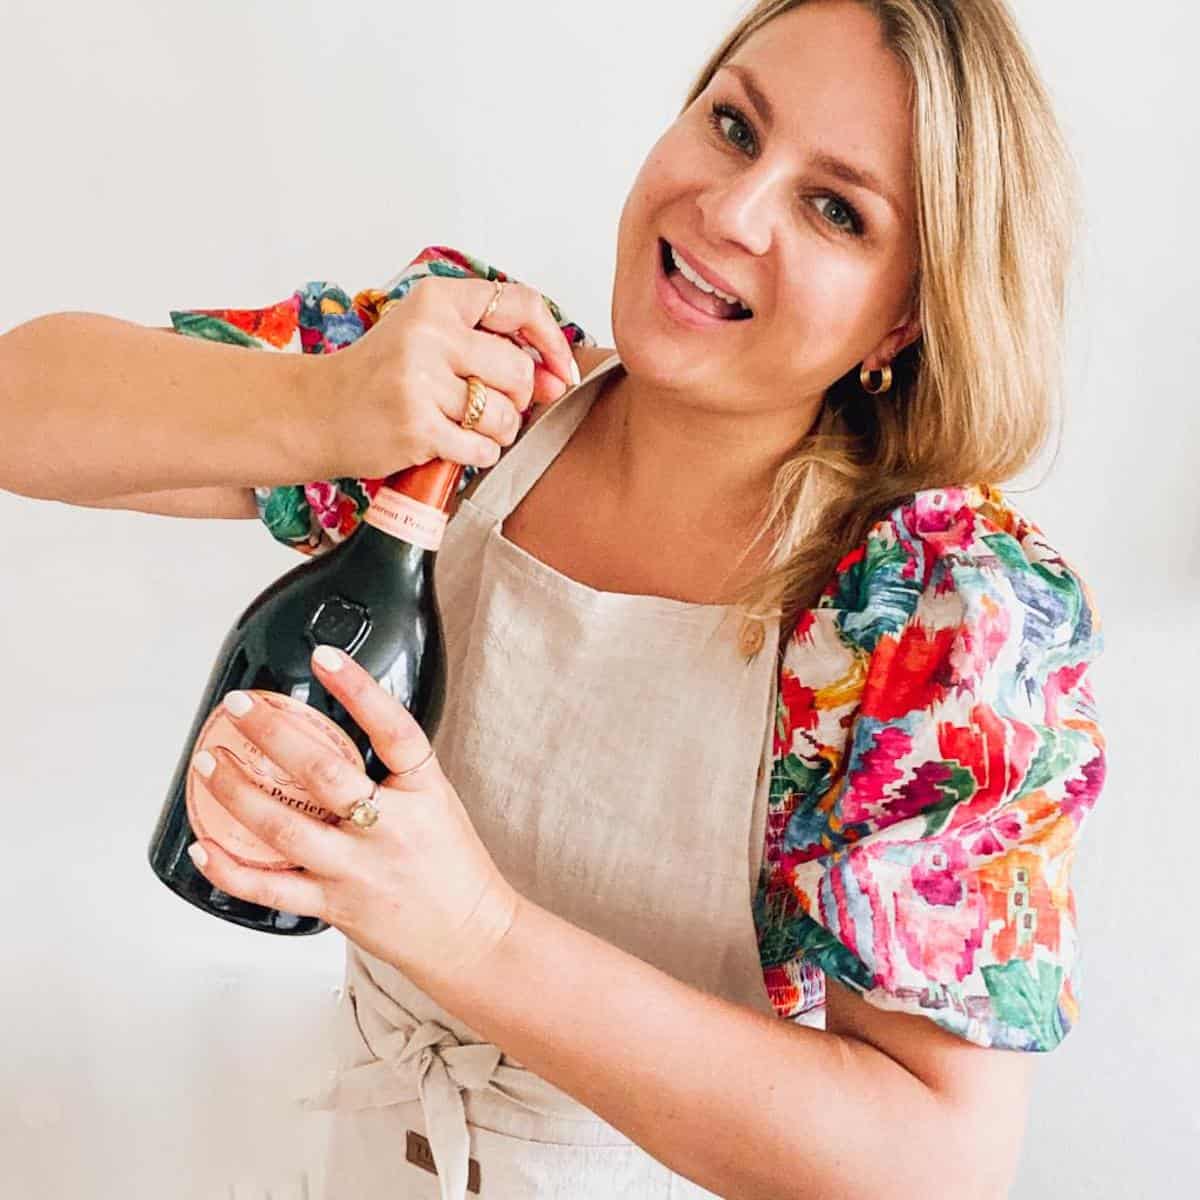 Rosanna Stevens opening a bottle of champagne.